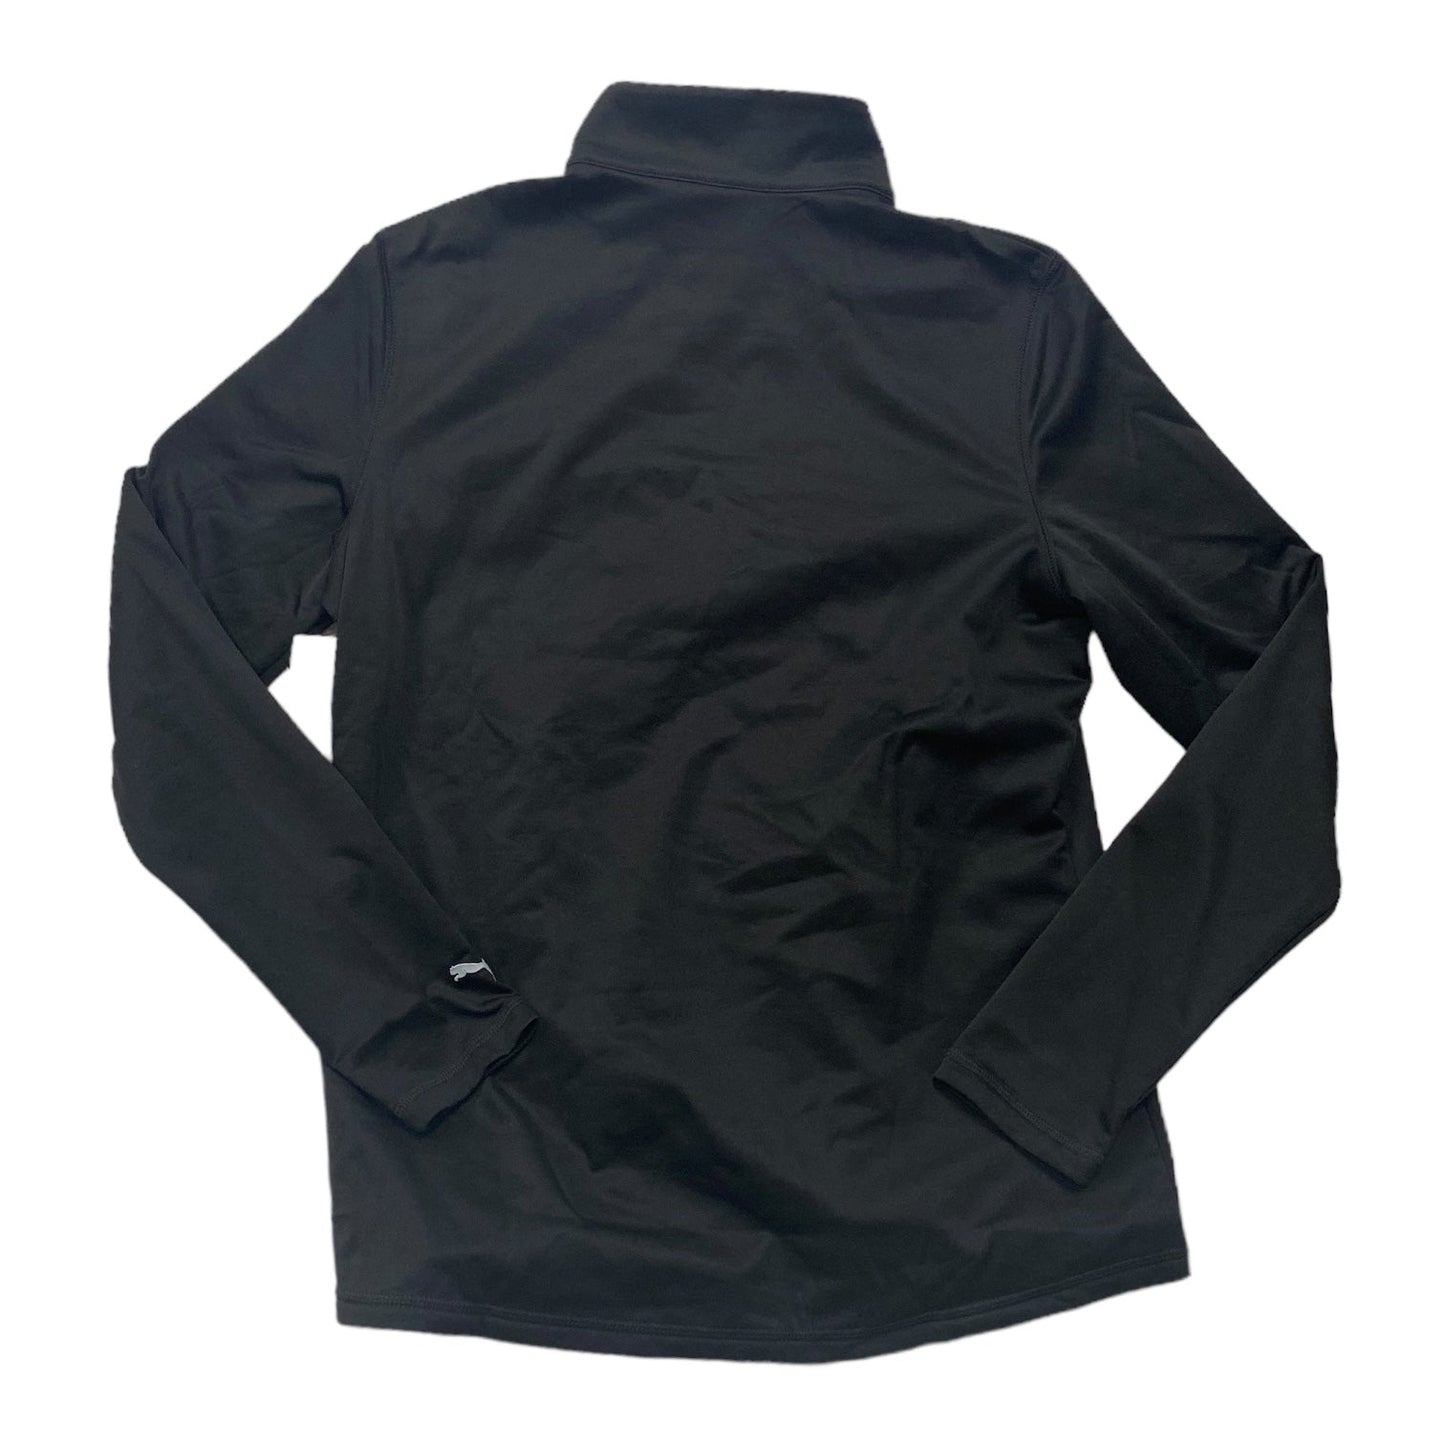 Black Athletic Jacket Puma, Size Xl